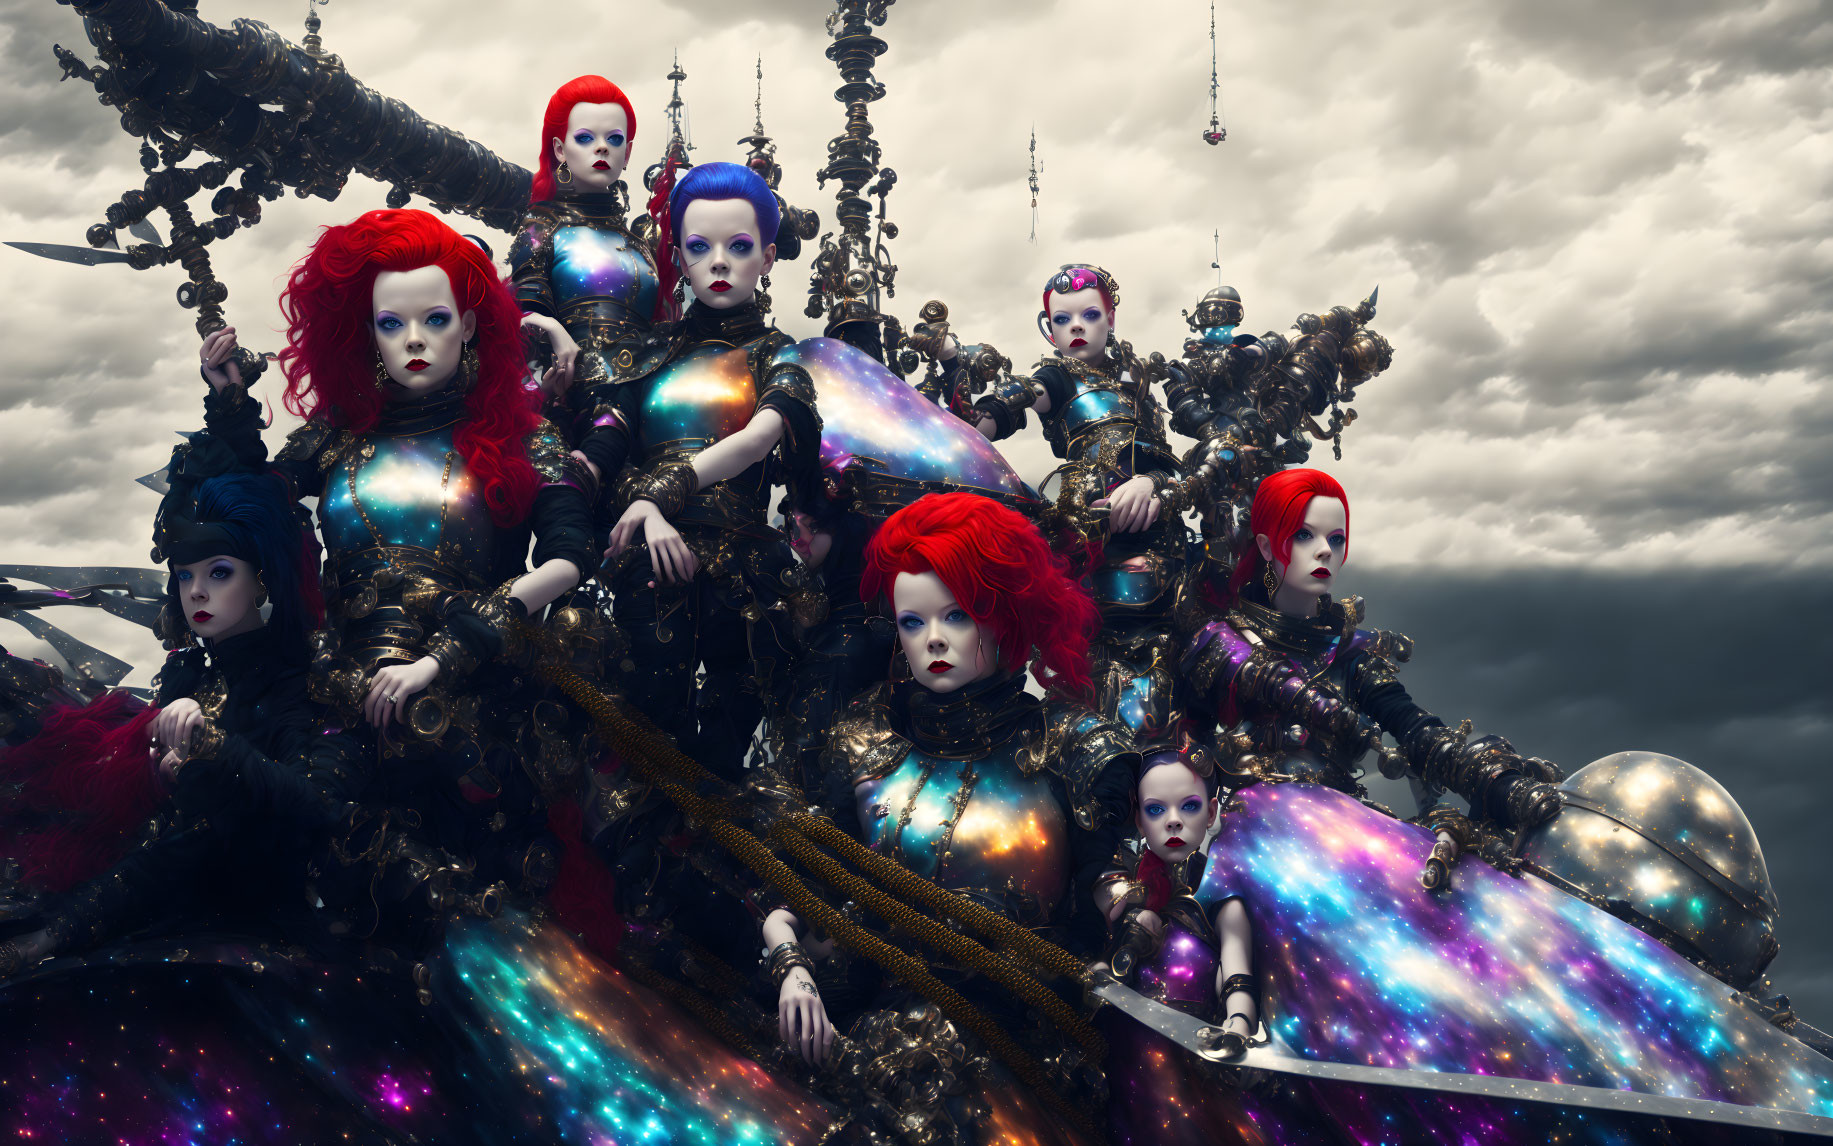 Diverse Fantasy Dolls in Cosmic Armor Under Stormy Sky